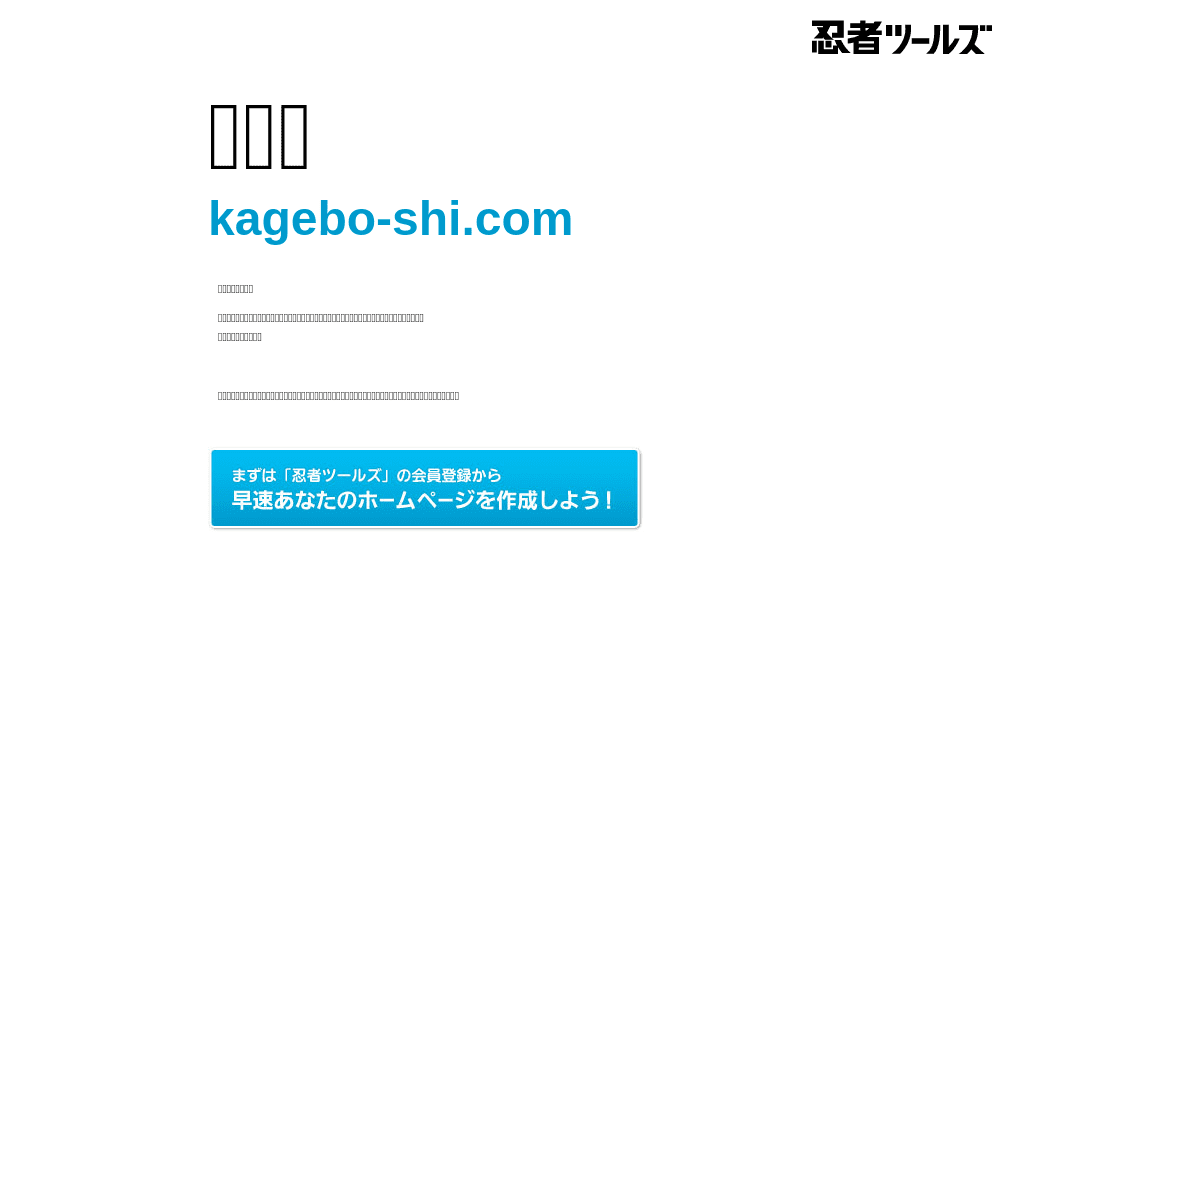 A complete backup of https://kagebo-shi.com